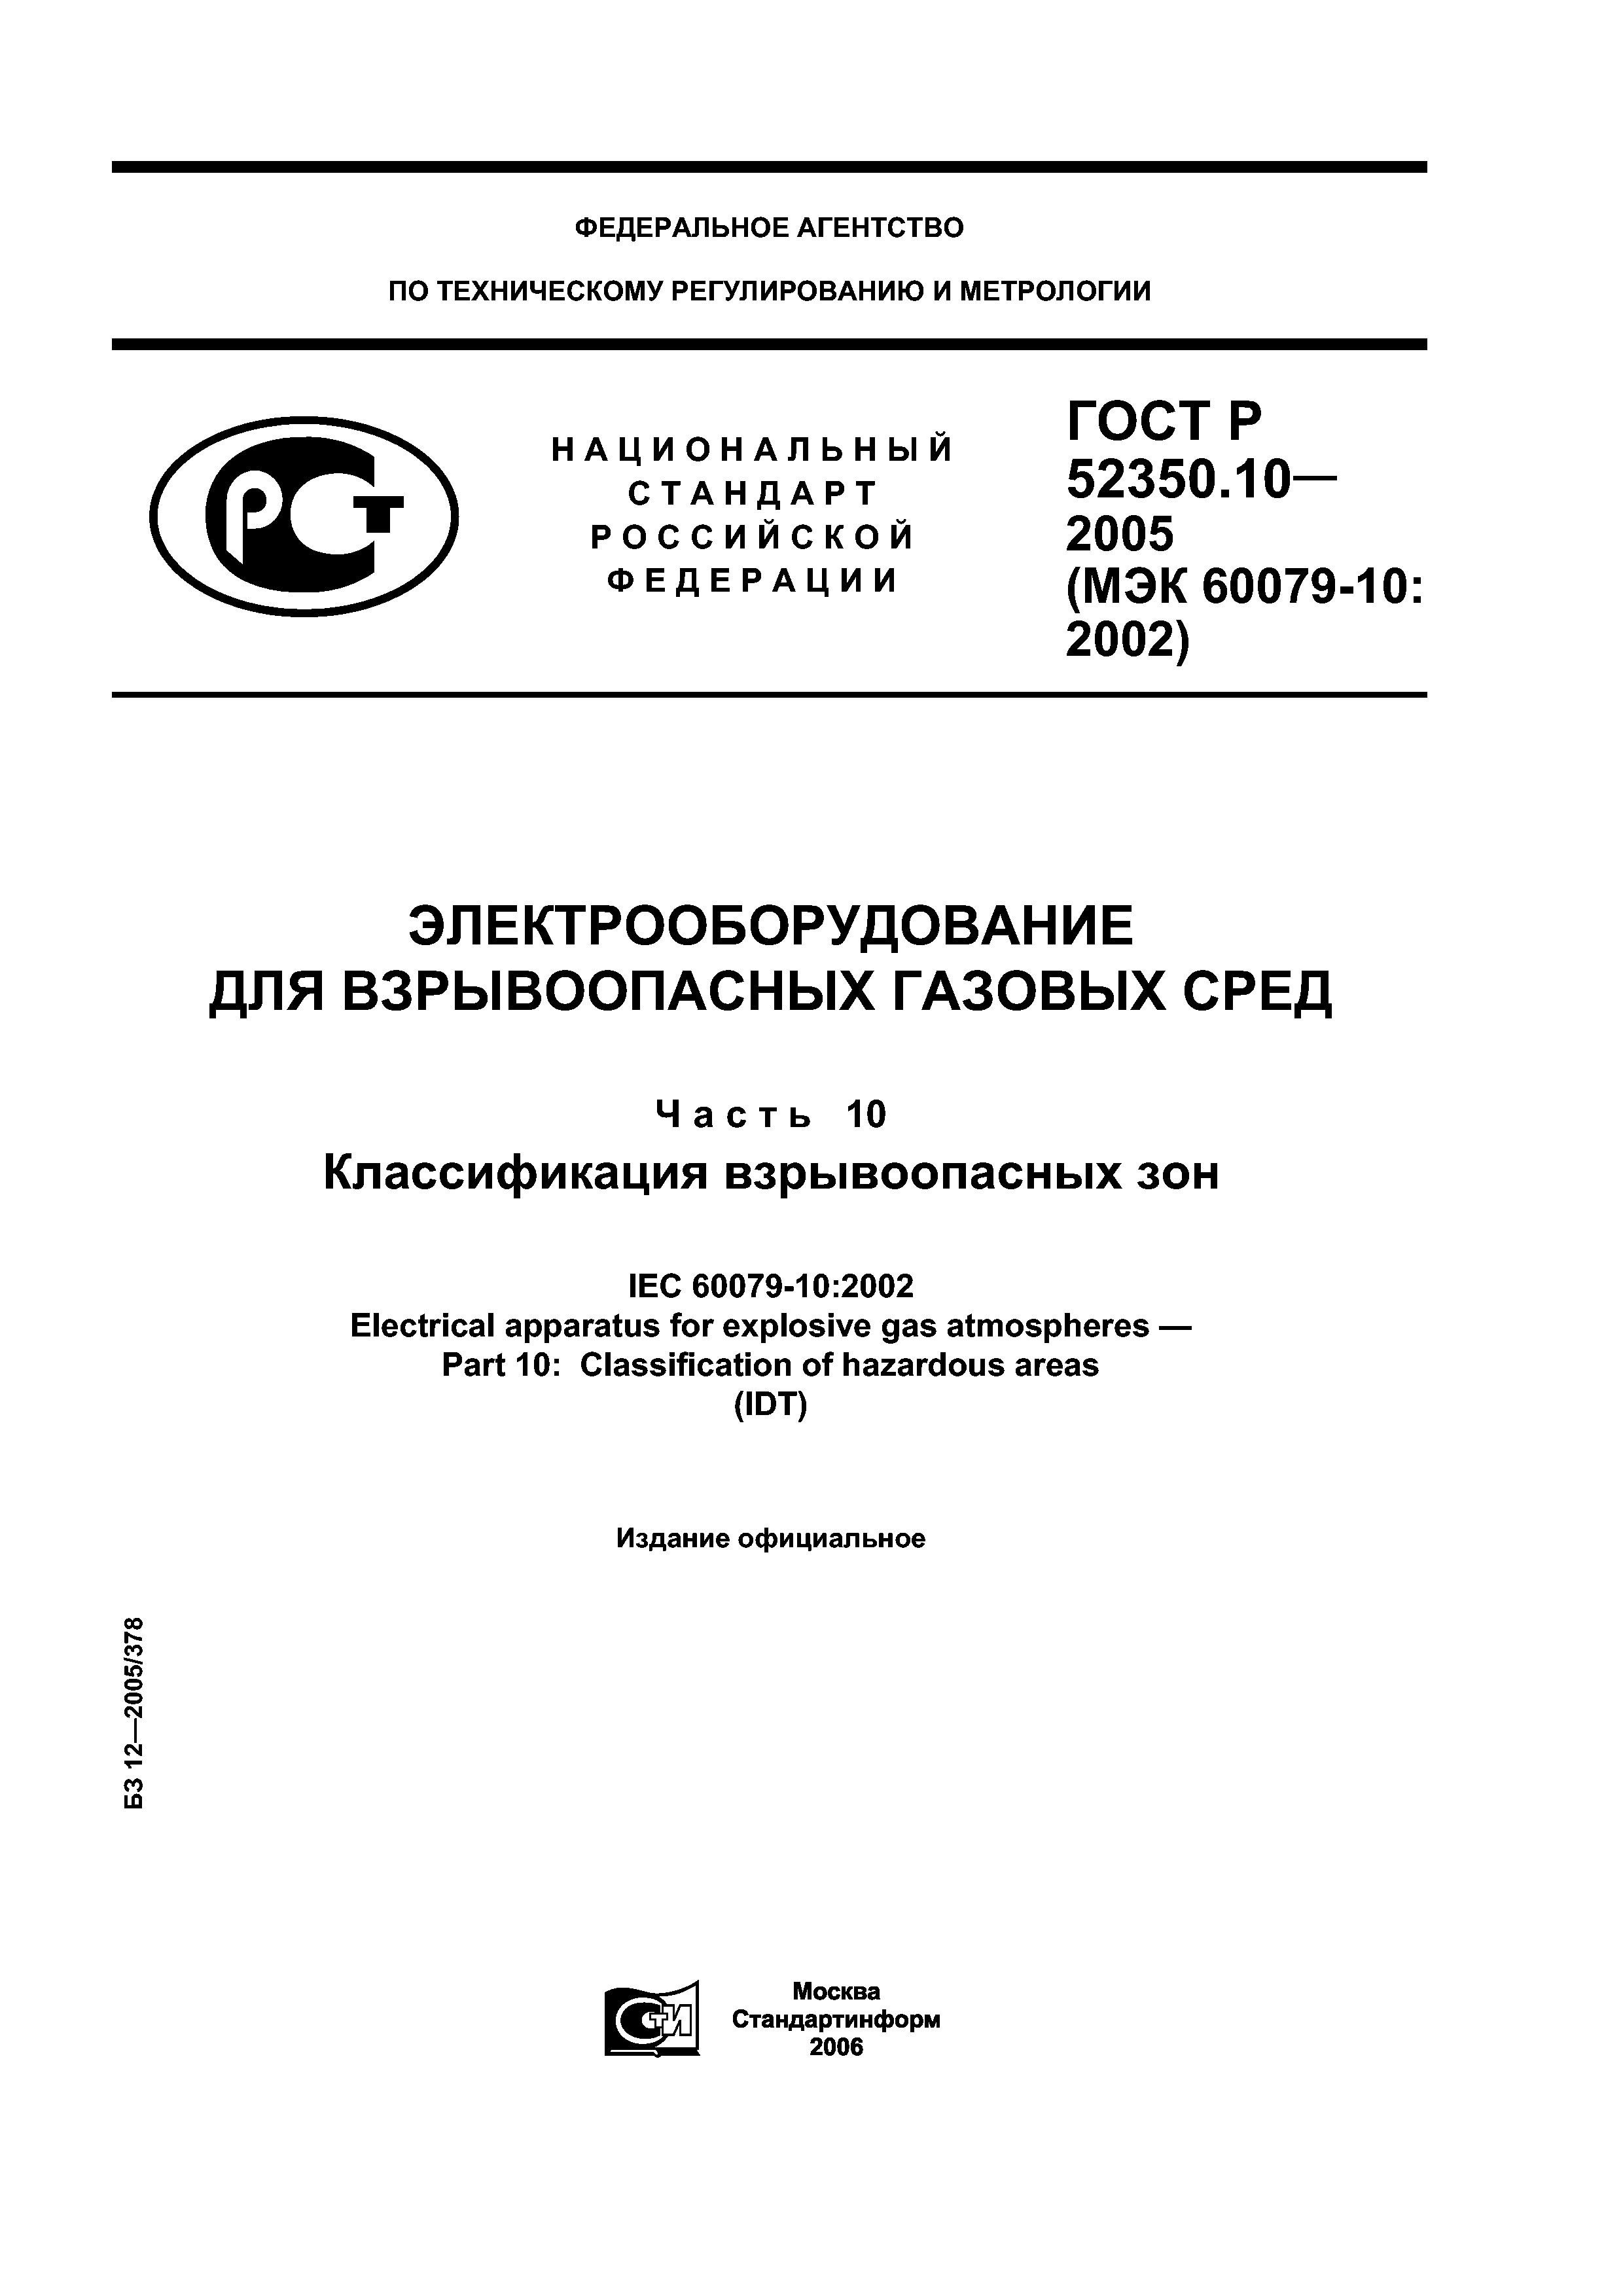 ГОСТ Р 52350.10-2005